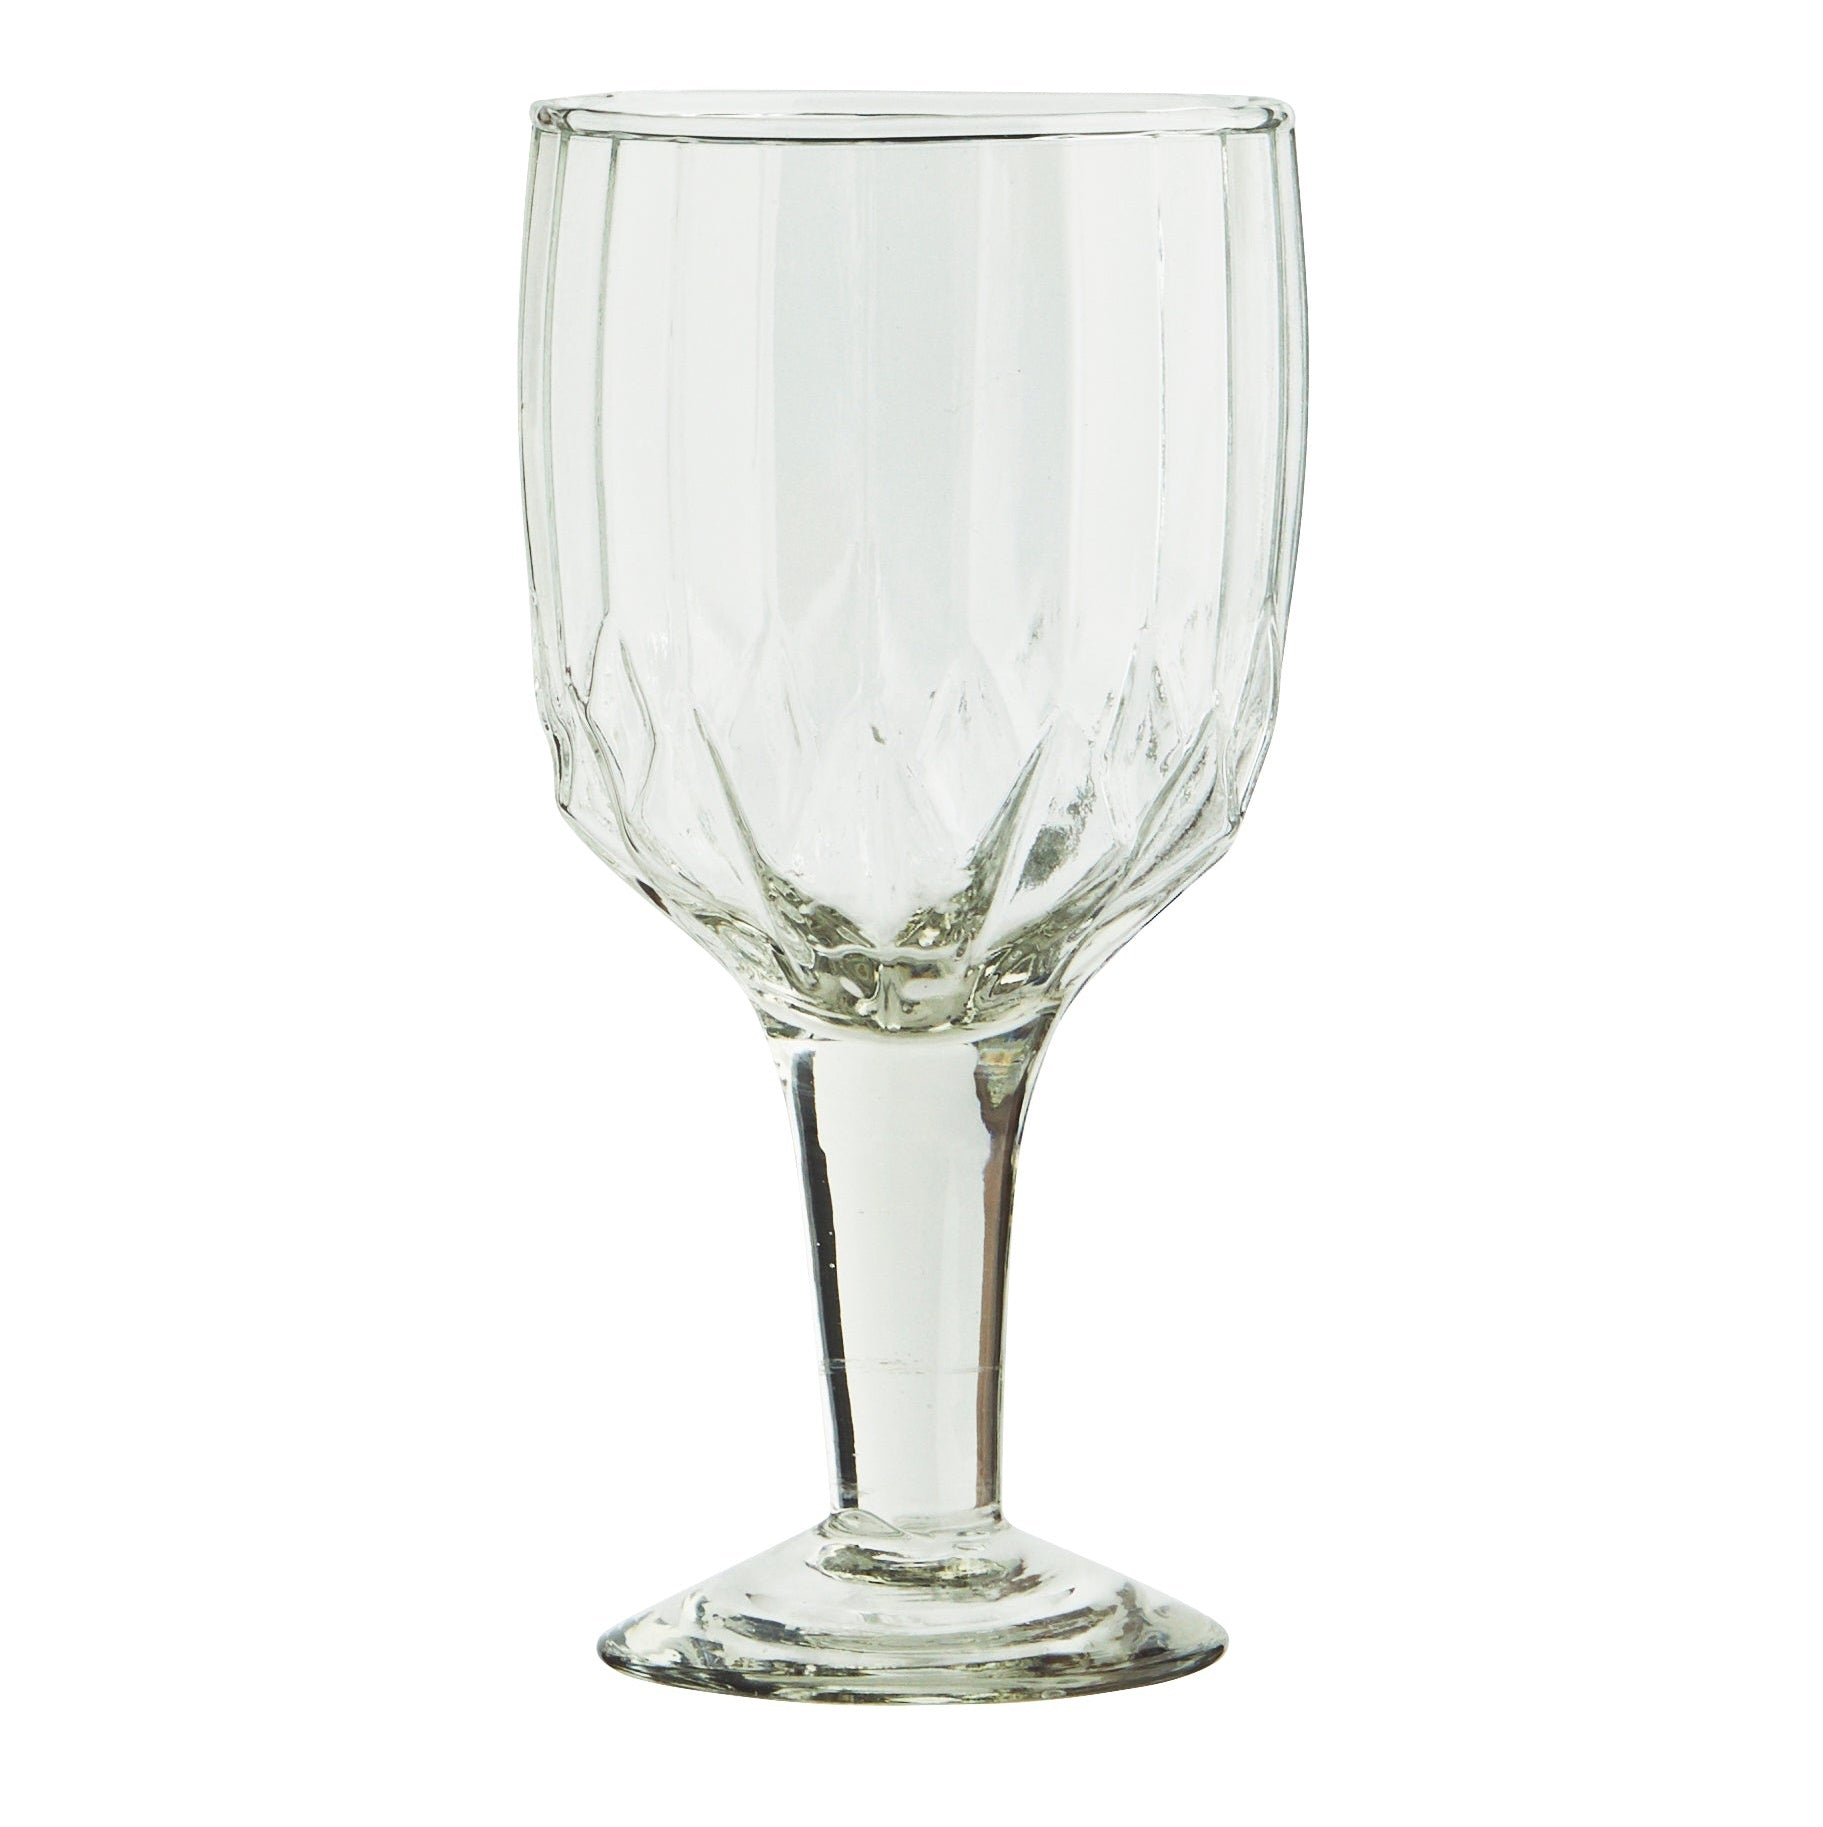 Small Wine Glass